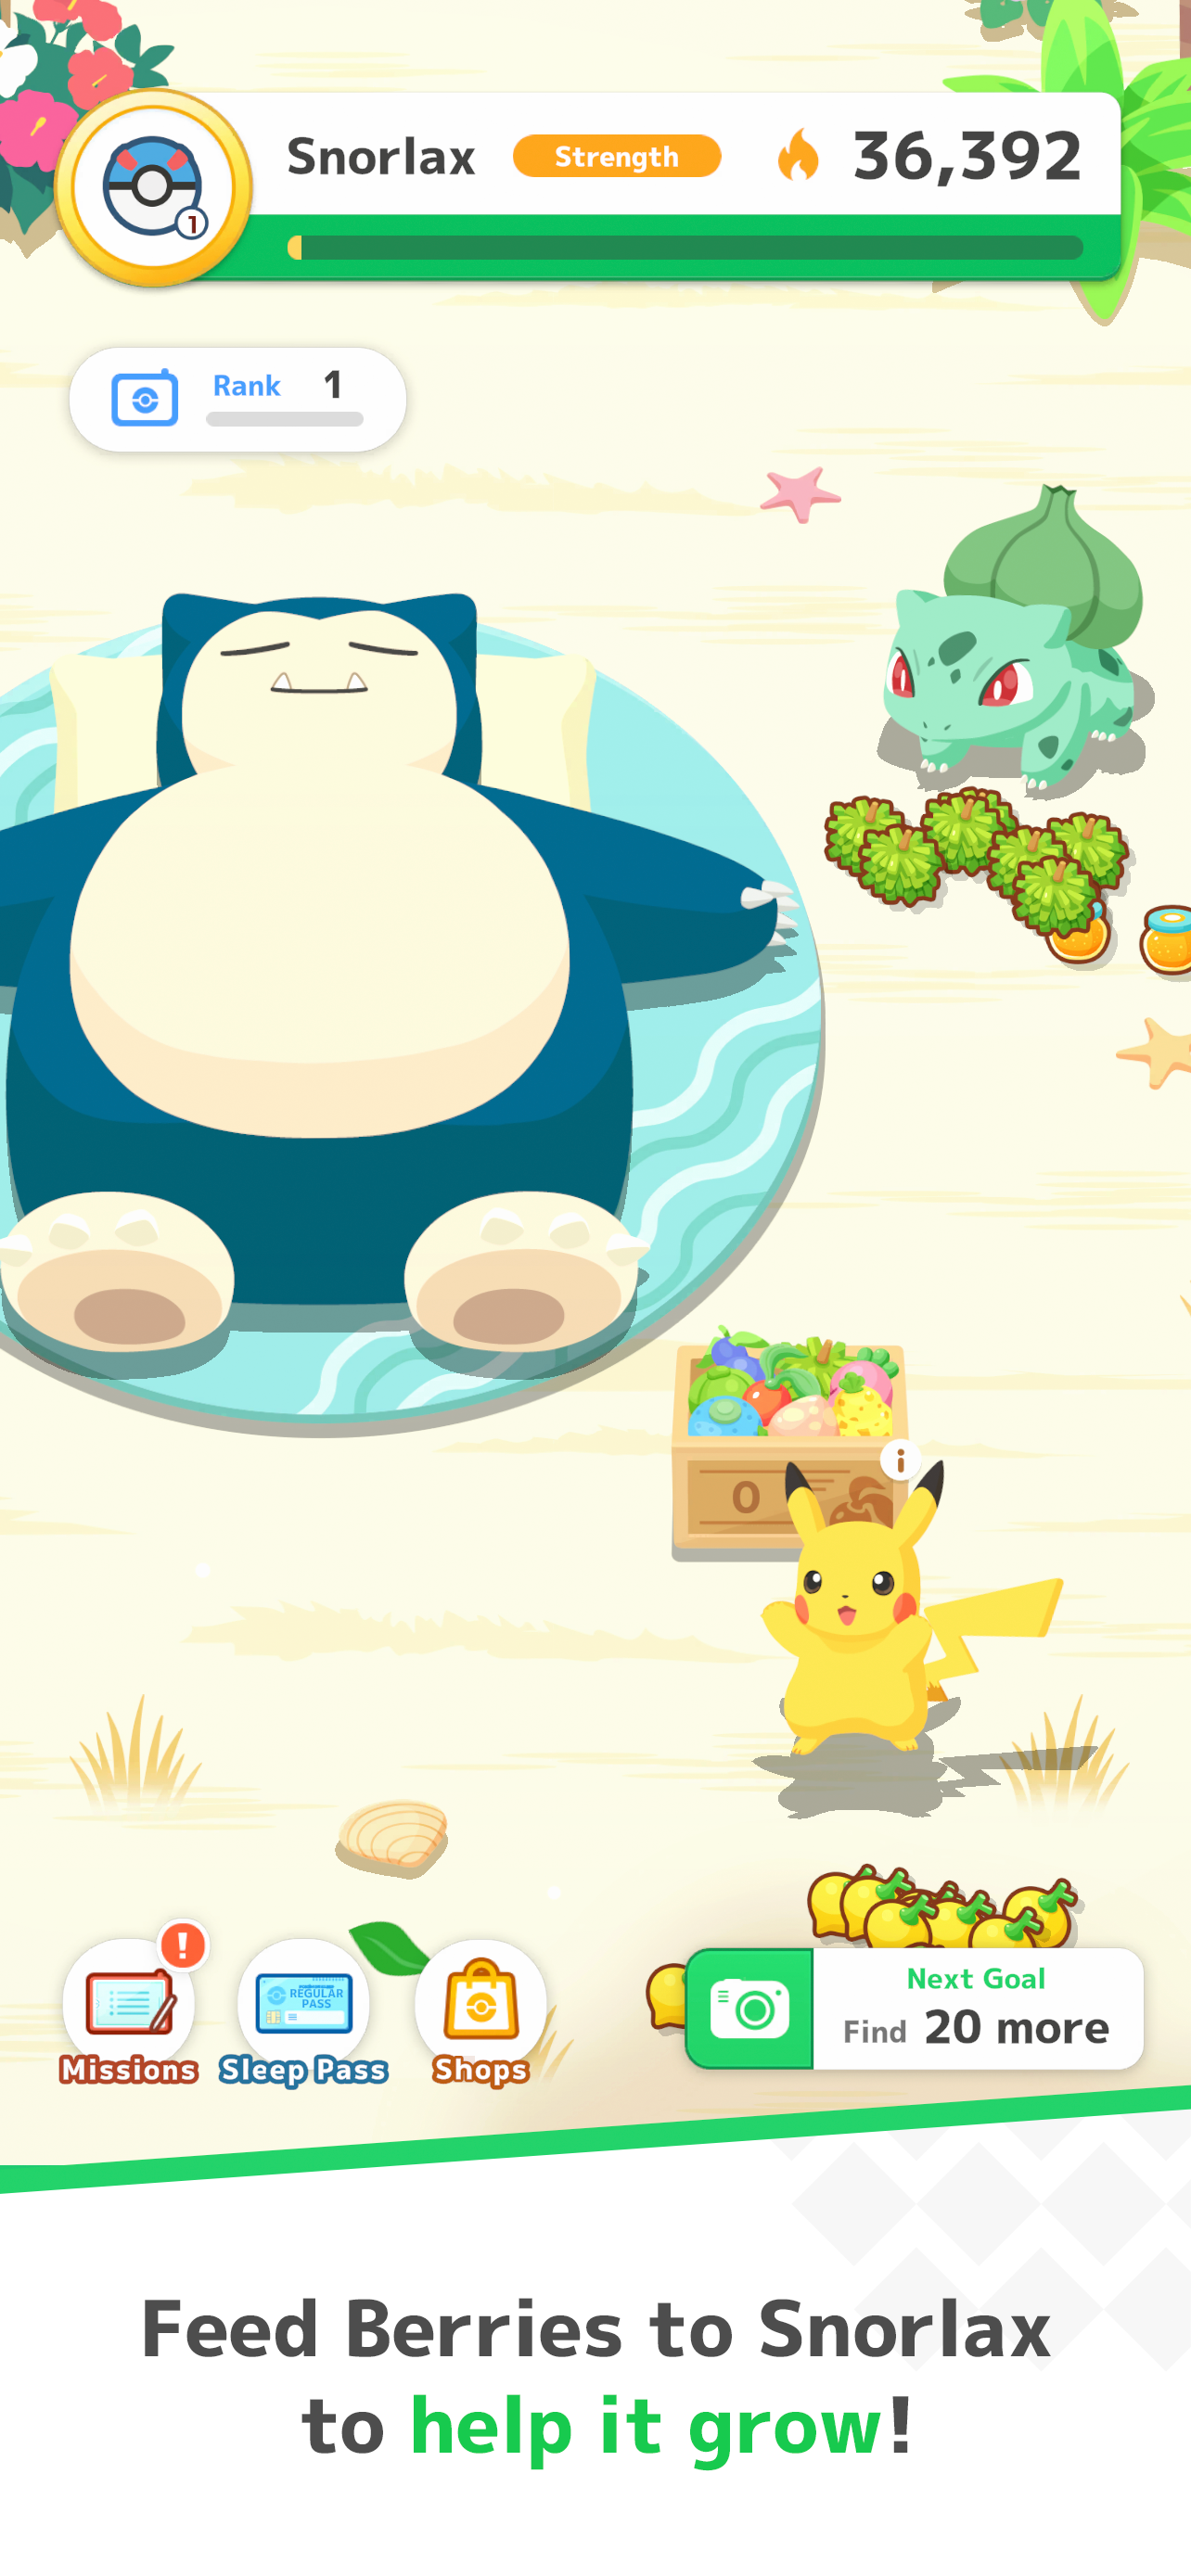 Pokémon Sleep screenshot game